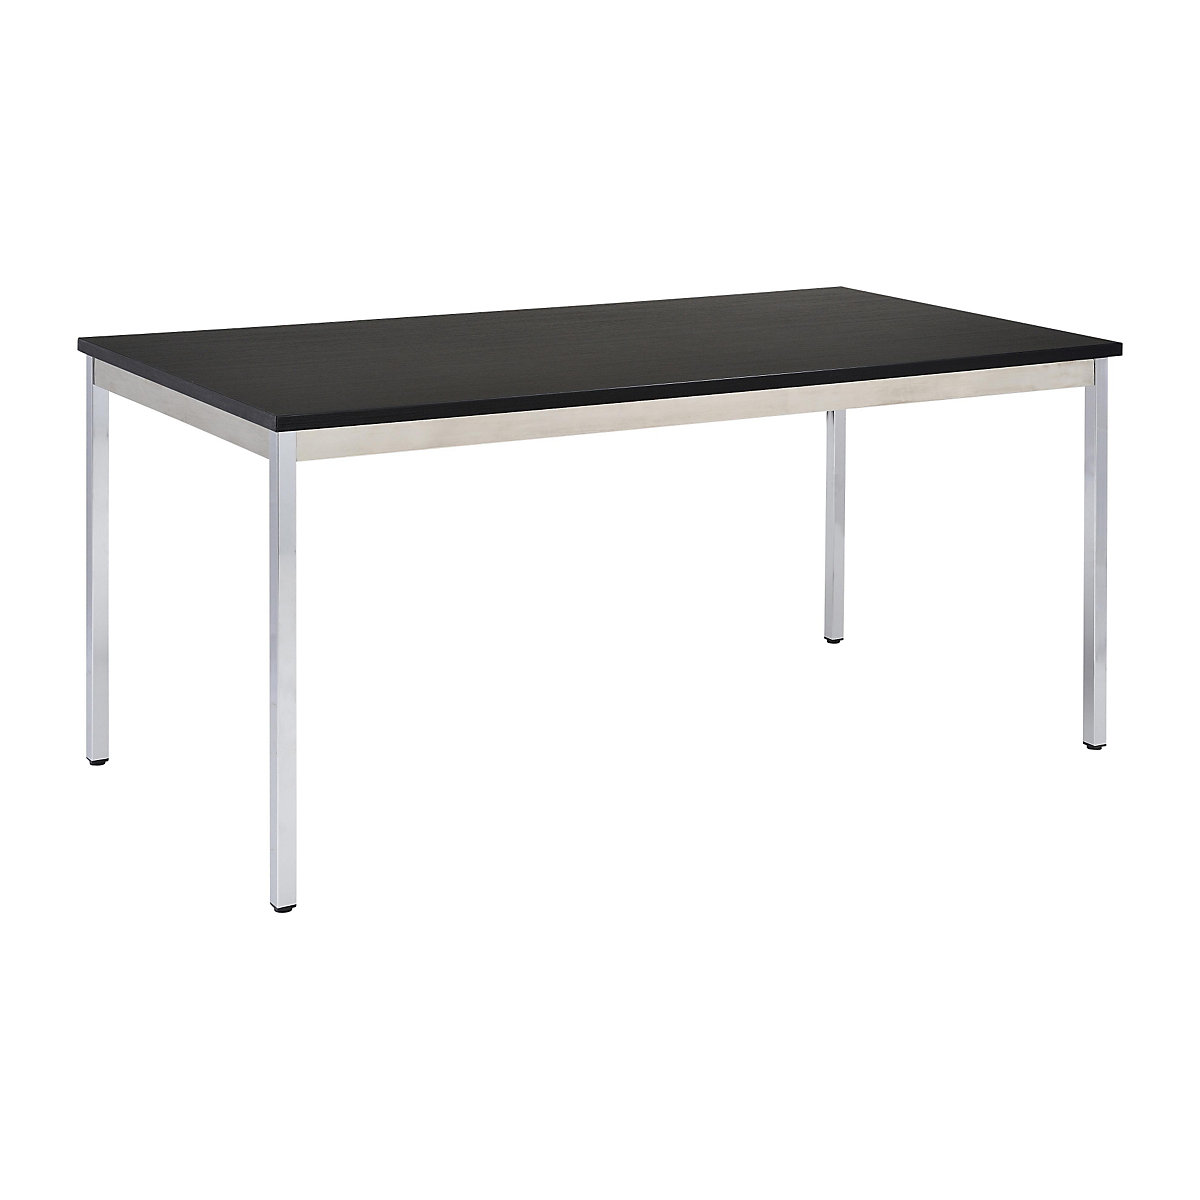 Universele tafel – eurokraft basic, rechthoekig, b x h = 1200 x 740 mm, diepte 600 mm, blad zwart, frame verchroomd